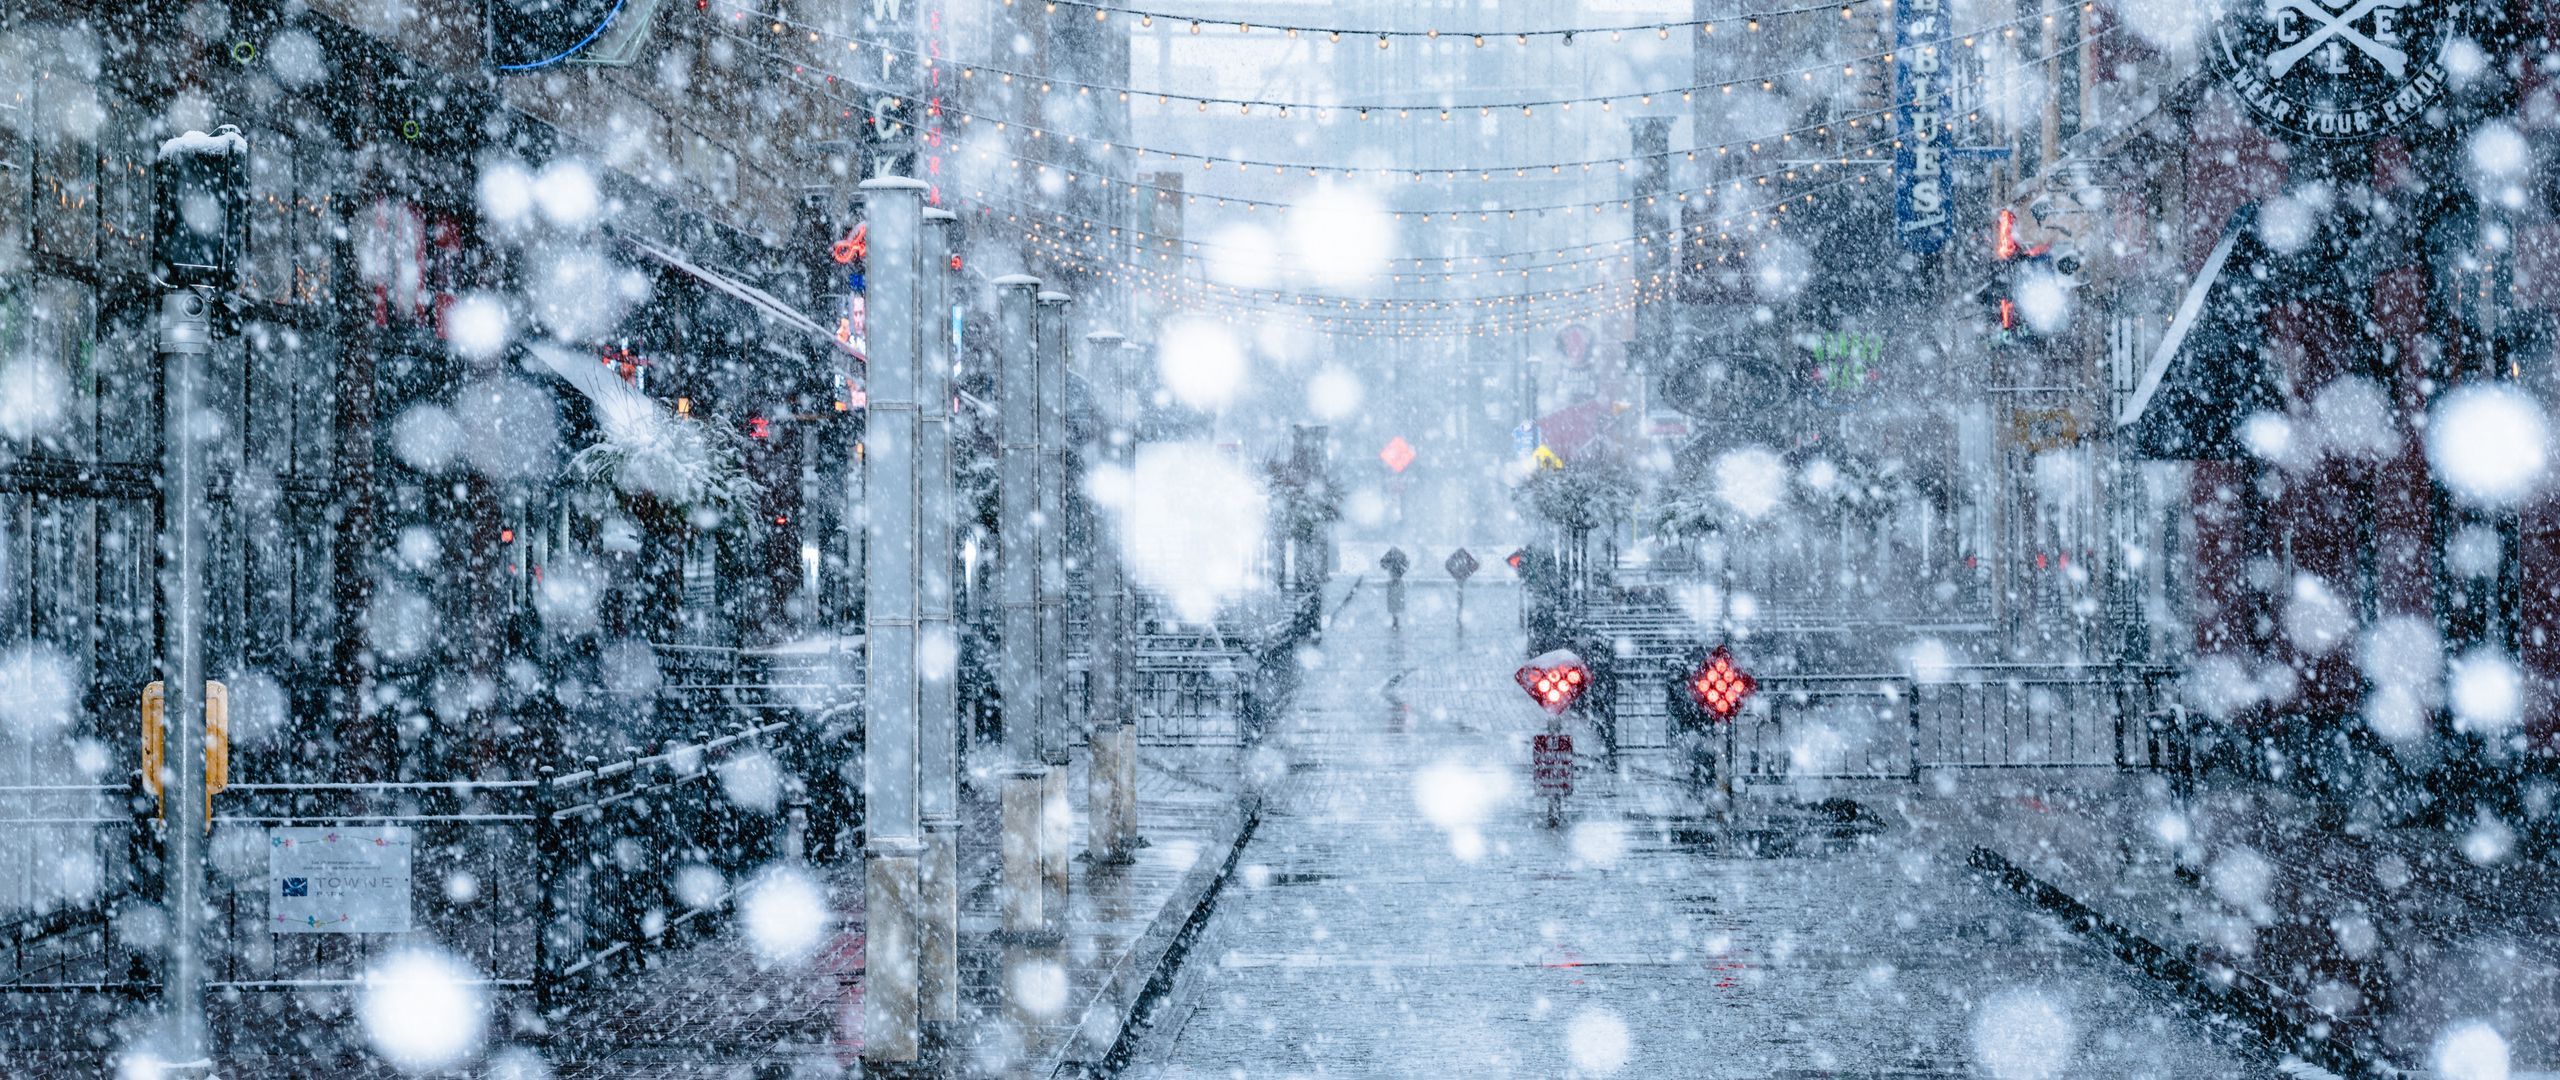 Download wallpaper 2560x1080 snowfall, snow, street, city, winter dual wide 1080p HD background